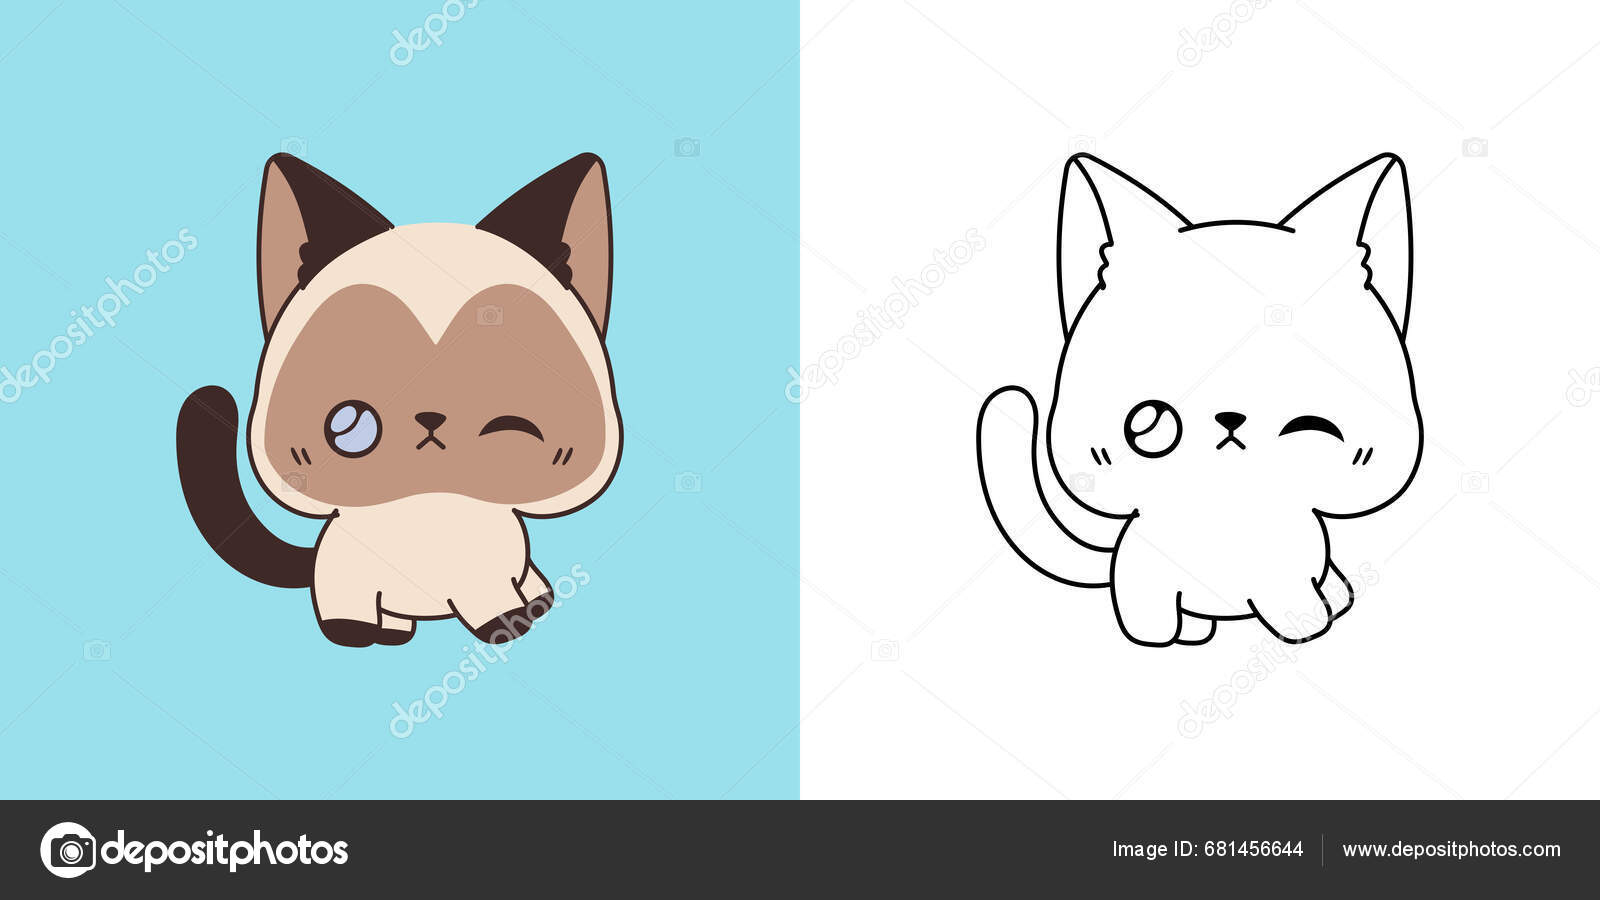 Cute isolatedsiamese cat illustration coloring page cartoon clip art kitty stock vector by artvarstudio